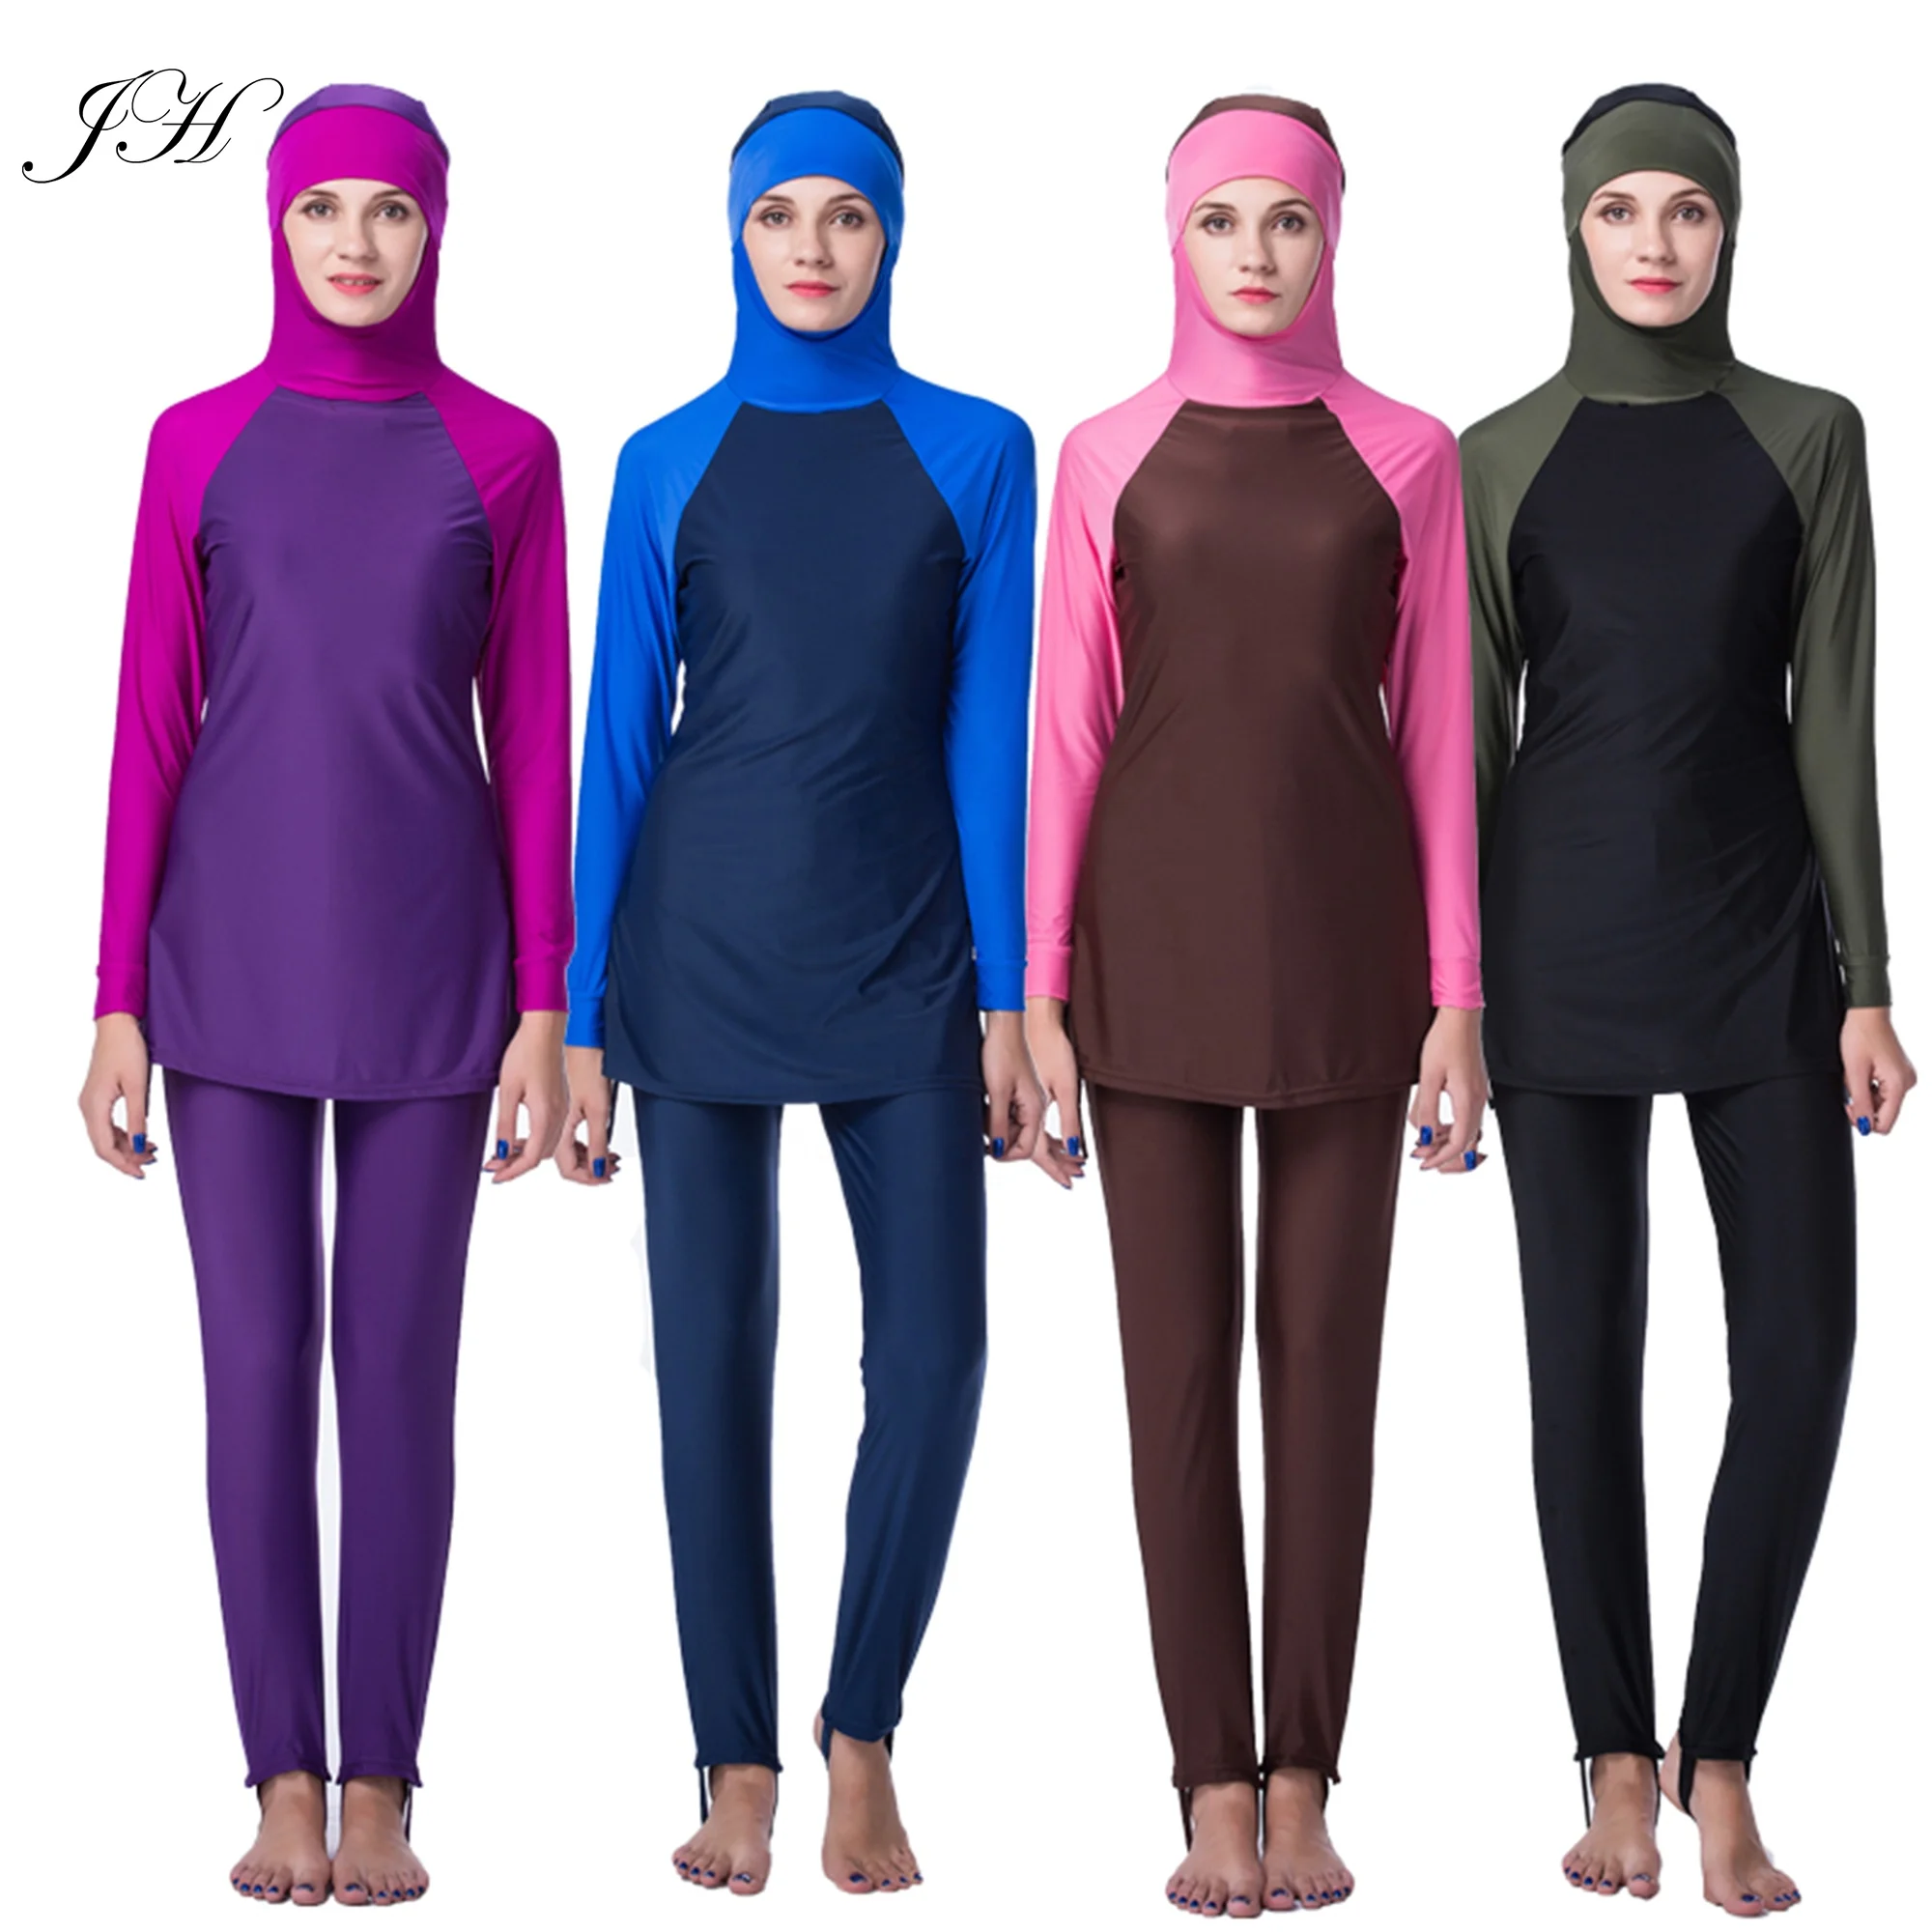 

2019 Muslim Modest Swimsuits Plus Size Women Burkinis Beachwear Islamic Swimwear Full Cover Hijab Swimming Suit Bathing Suit, 4 colors